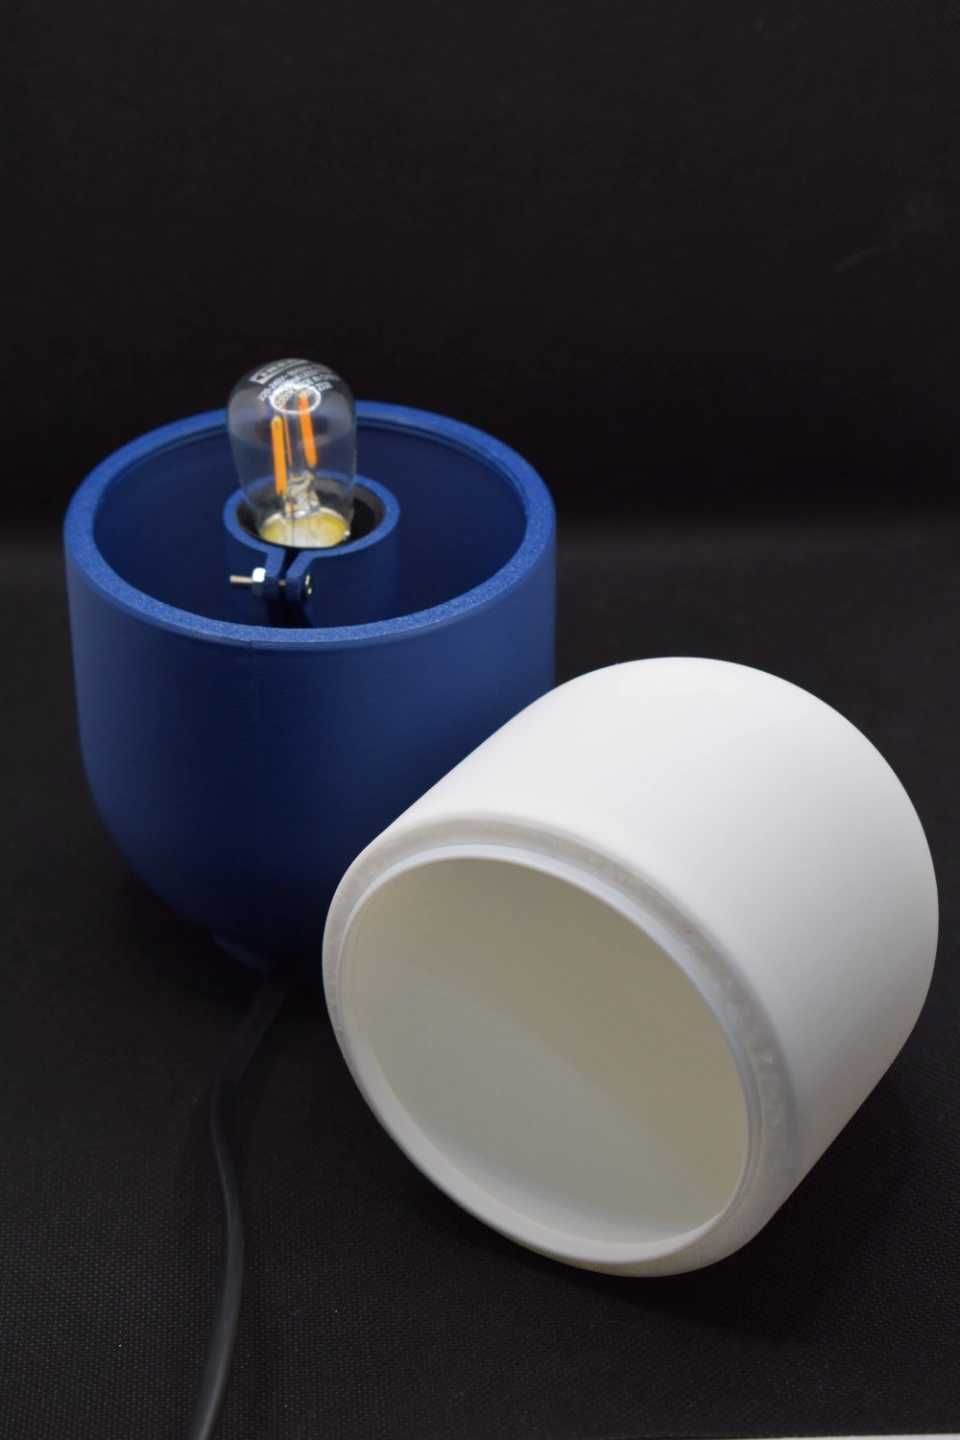 Vand lampa printata 3D - BOB